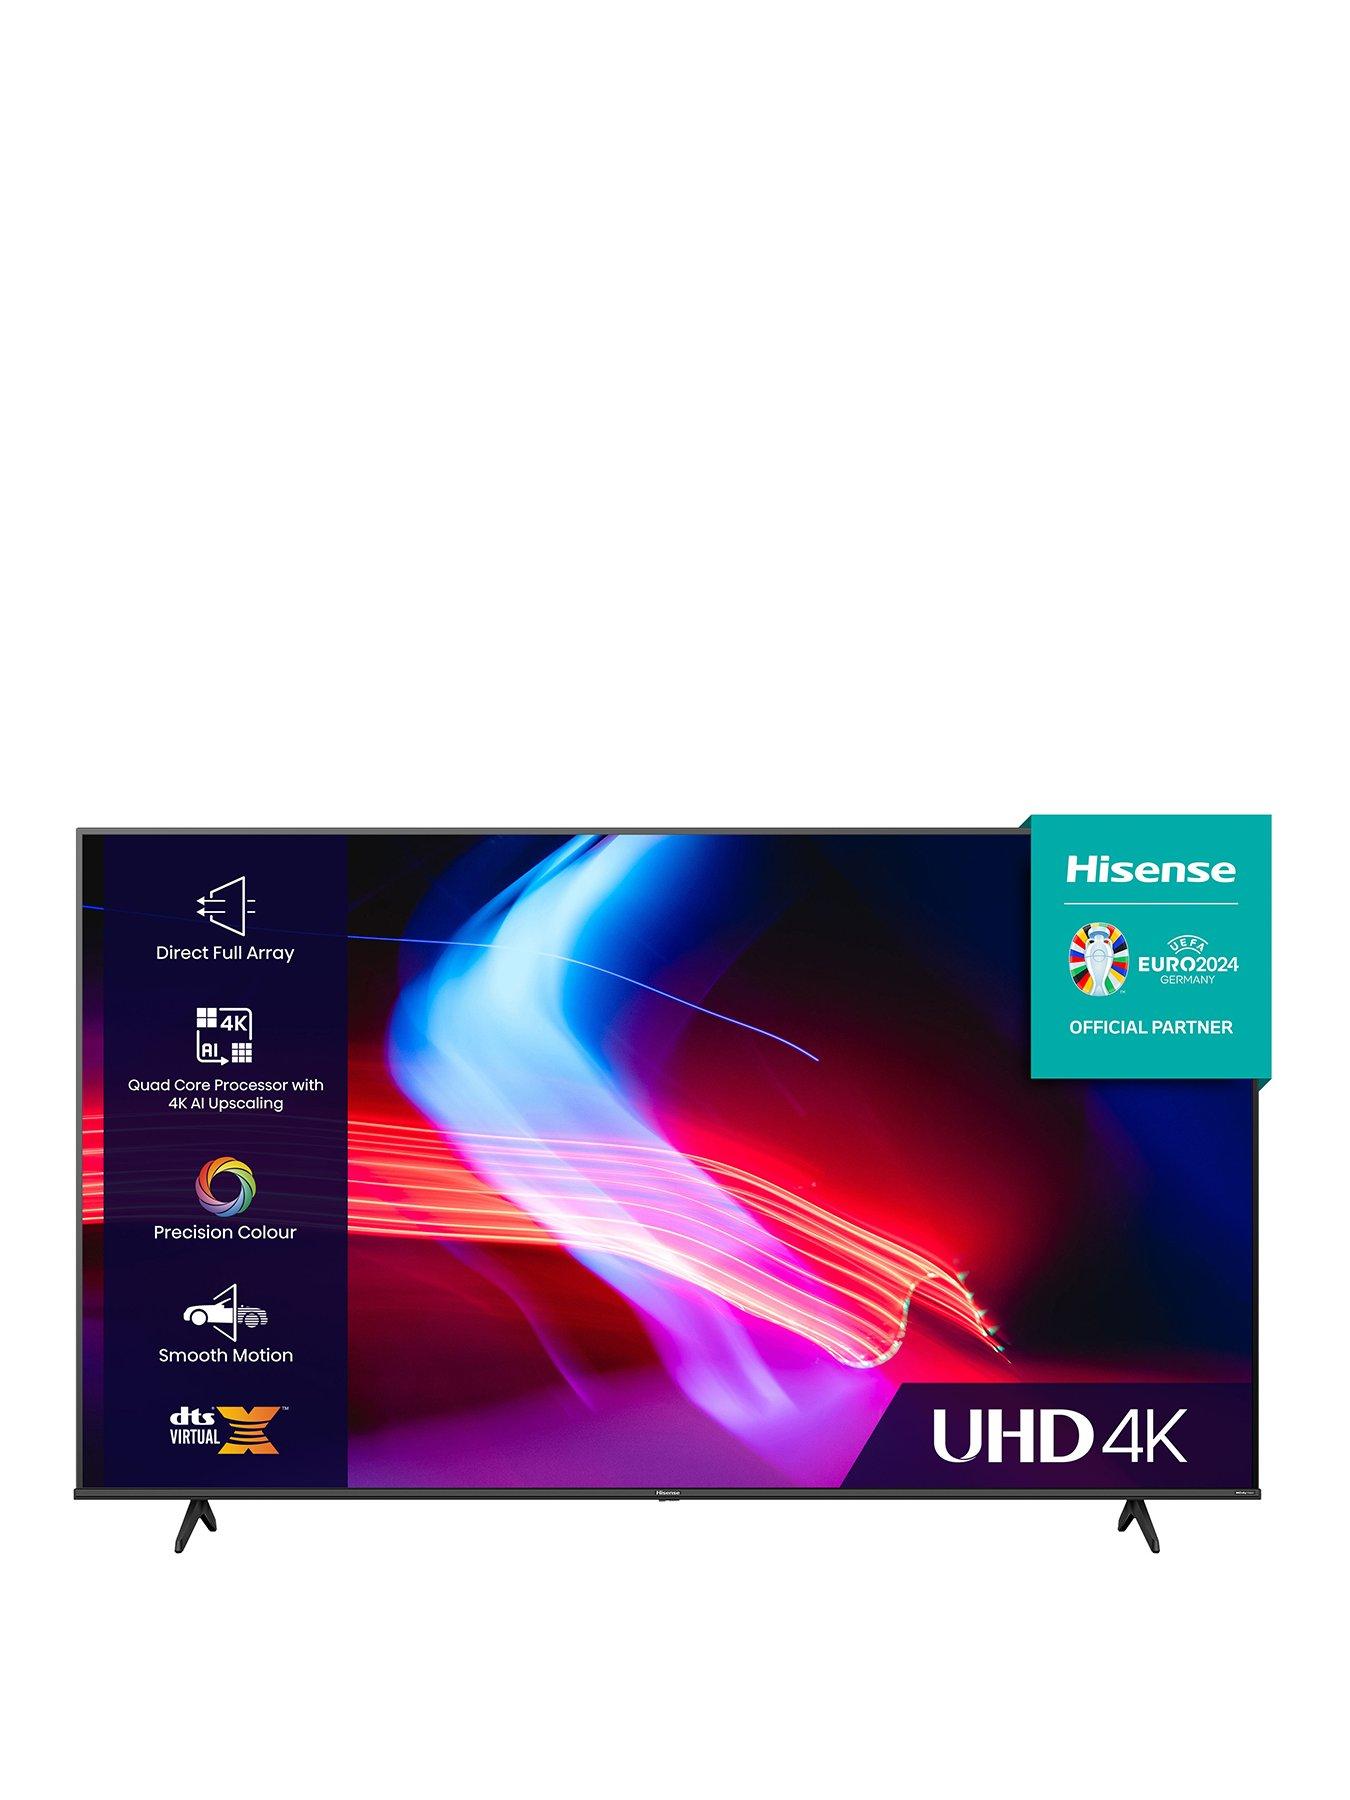 NIKE LOGO Ultra HD Desktop Background Wallpaper for 4K UHD TV